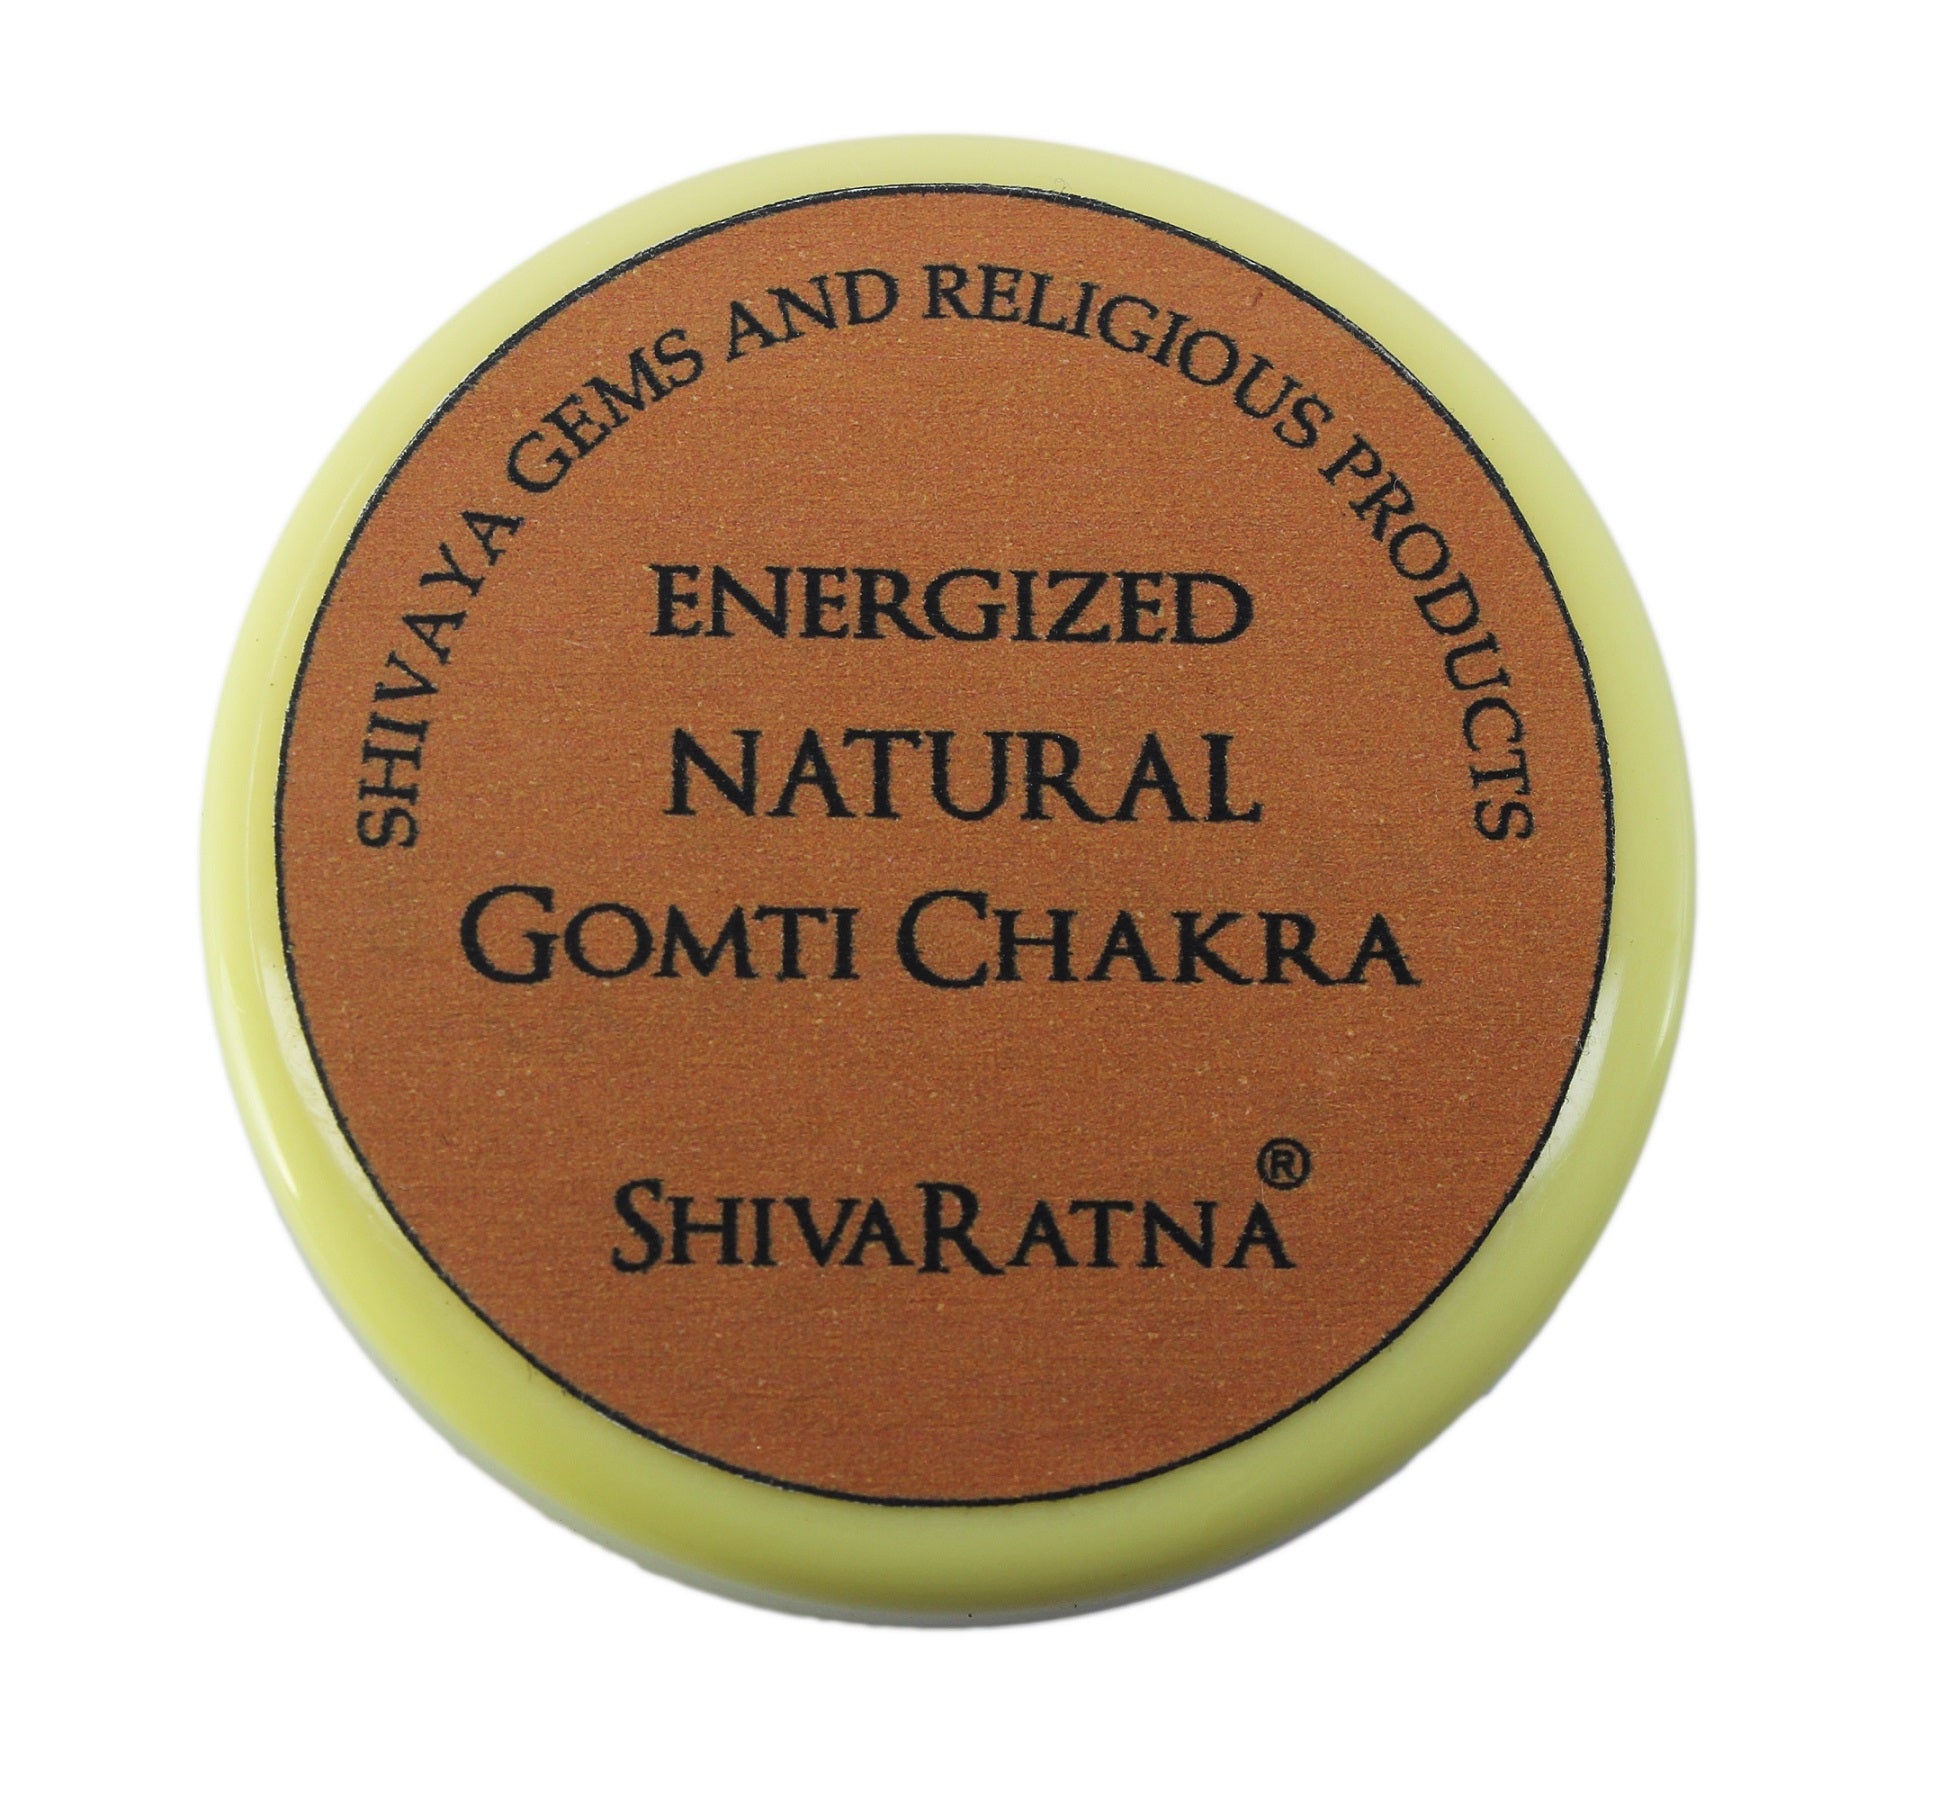 ShivaRatna Natural Gomti Chakra (Good Shape and No Damage) - - 21 Hand Picked Pieces - ShivaRatna